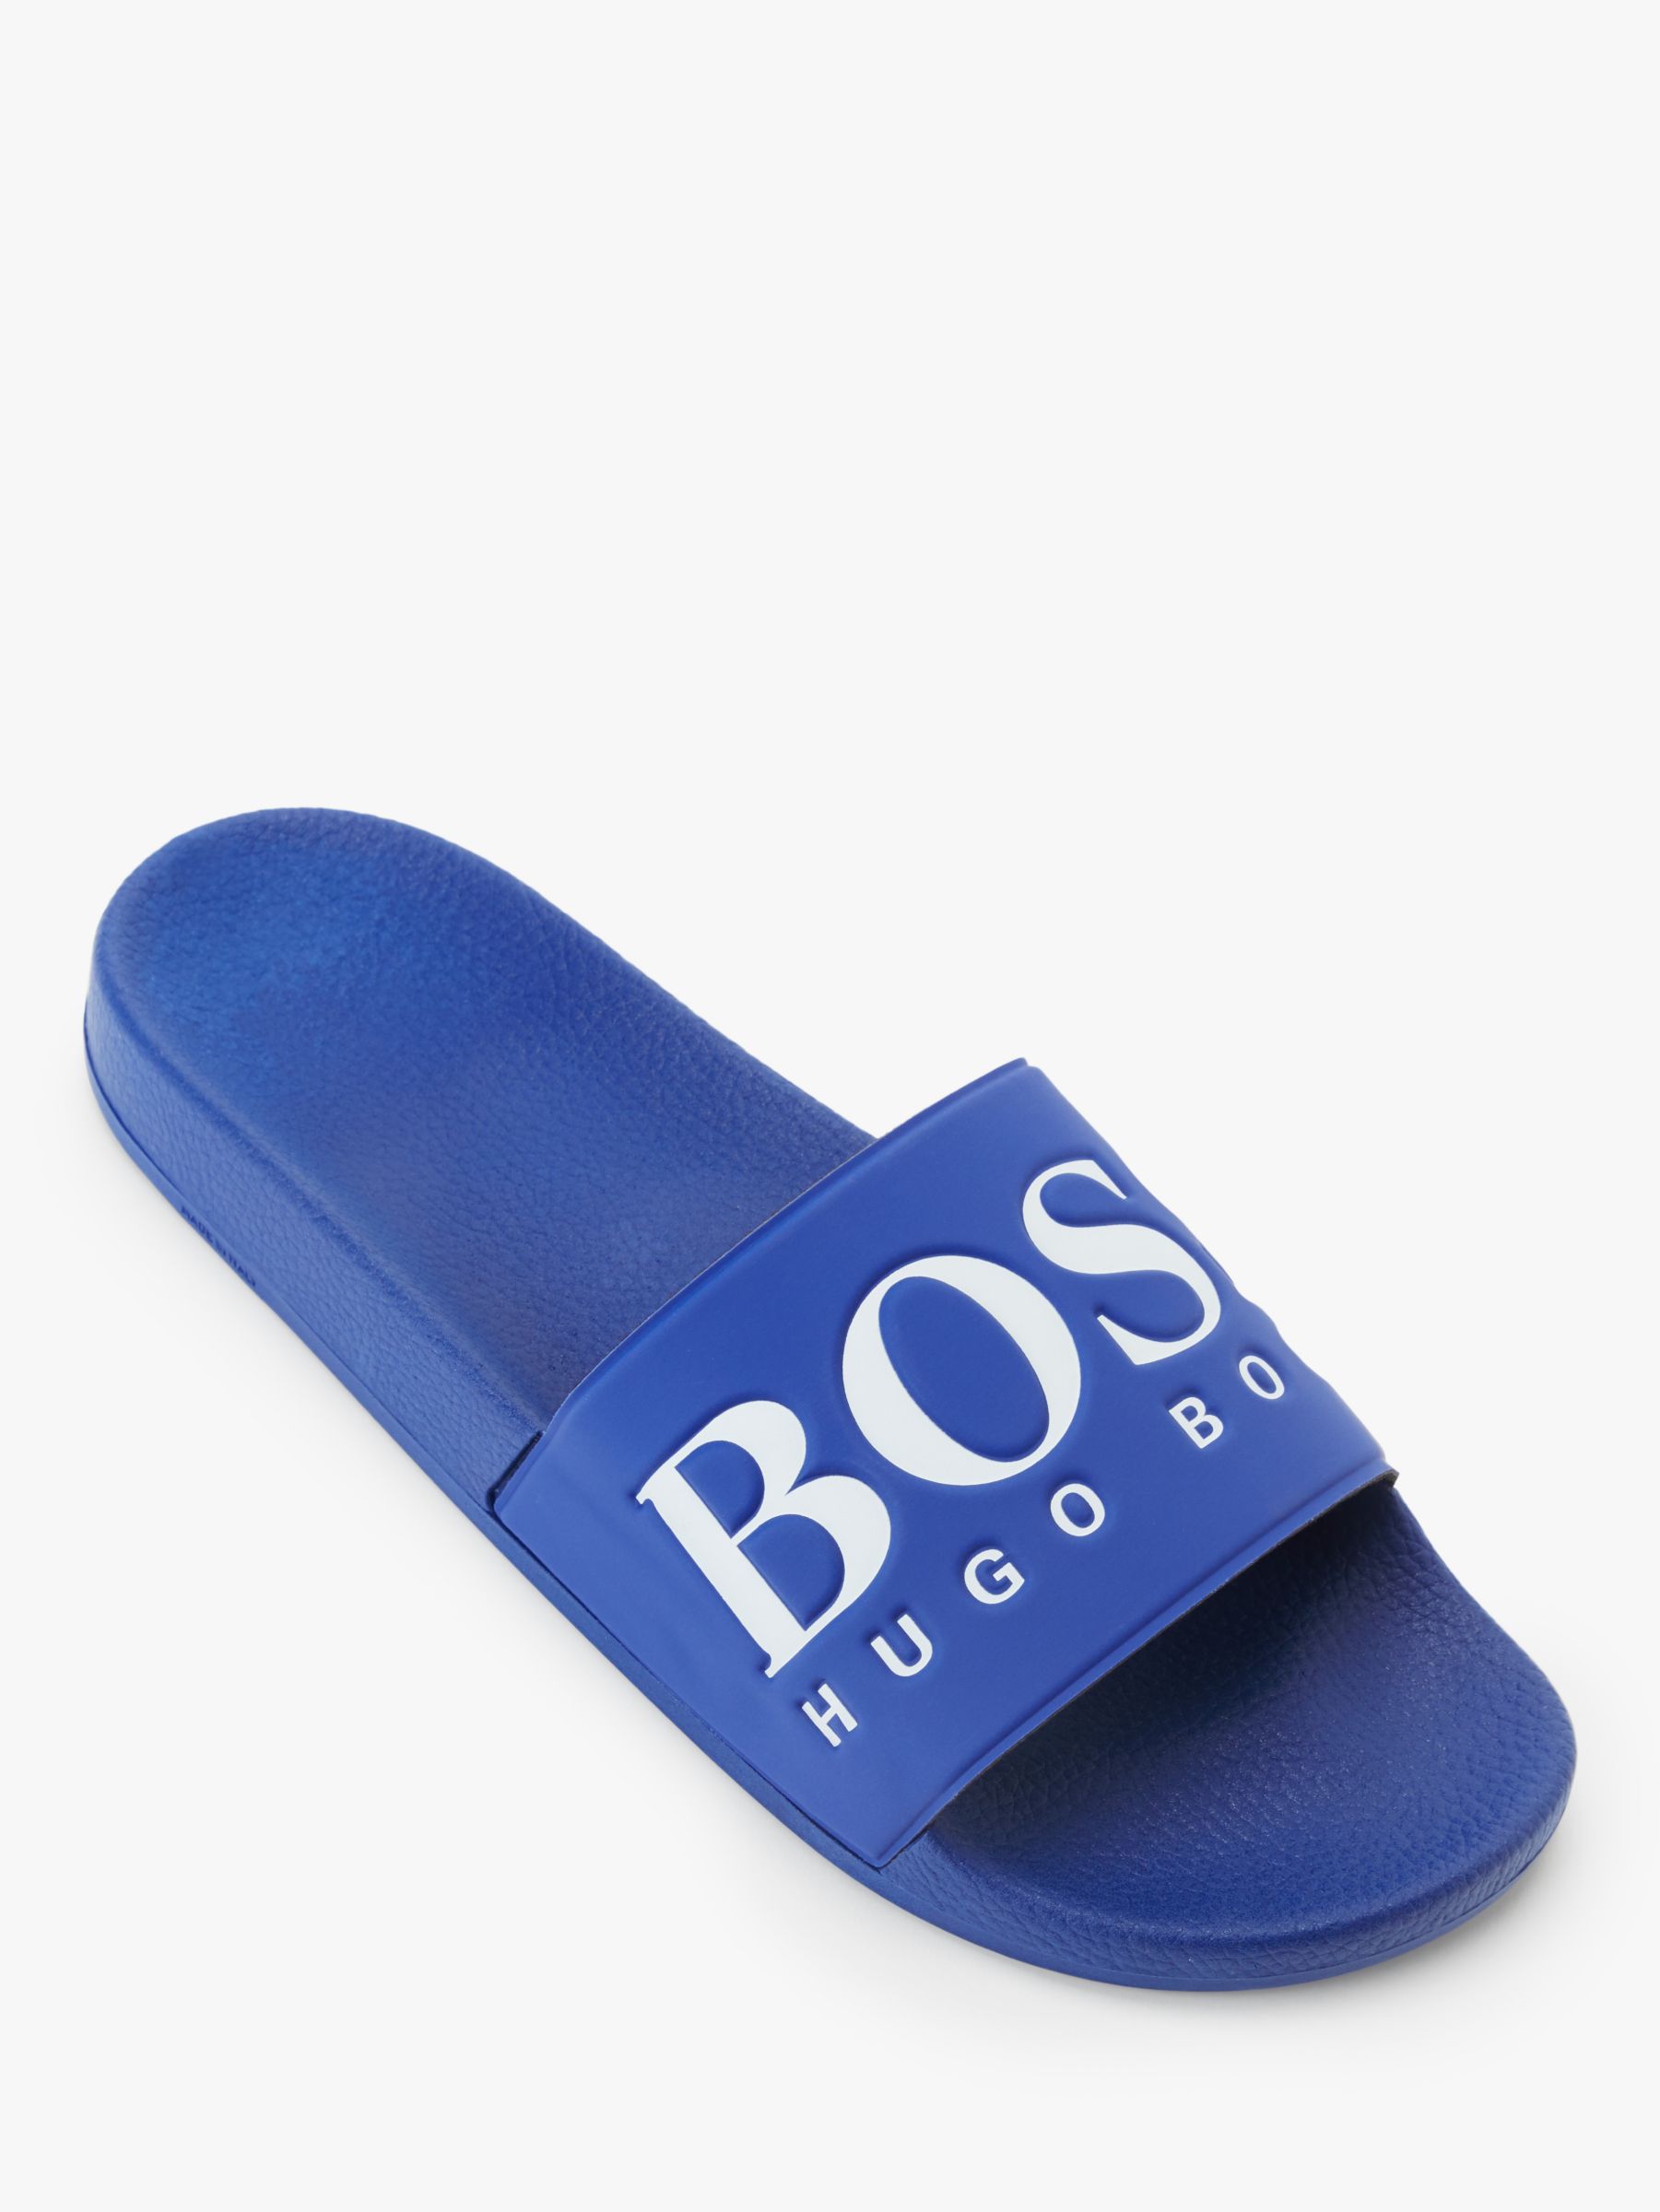 hugo boss baby flip flops